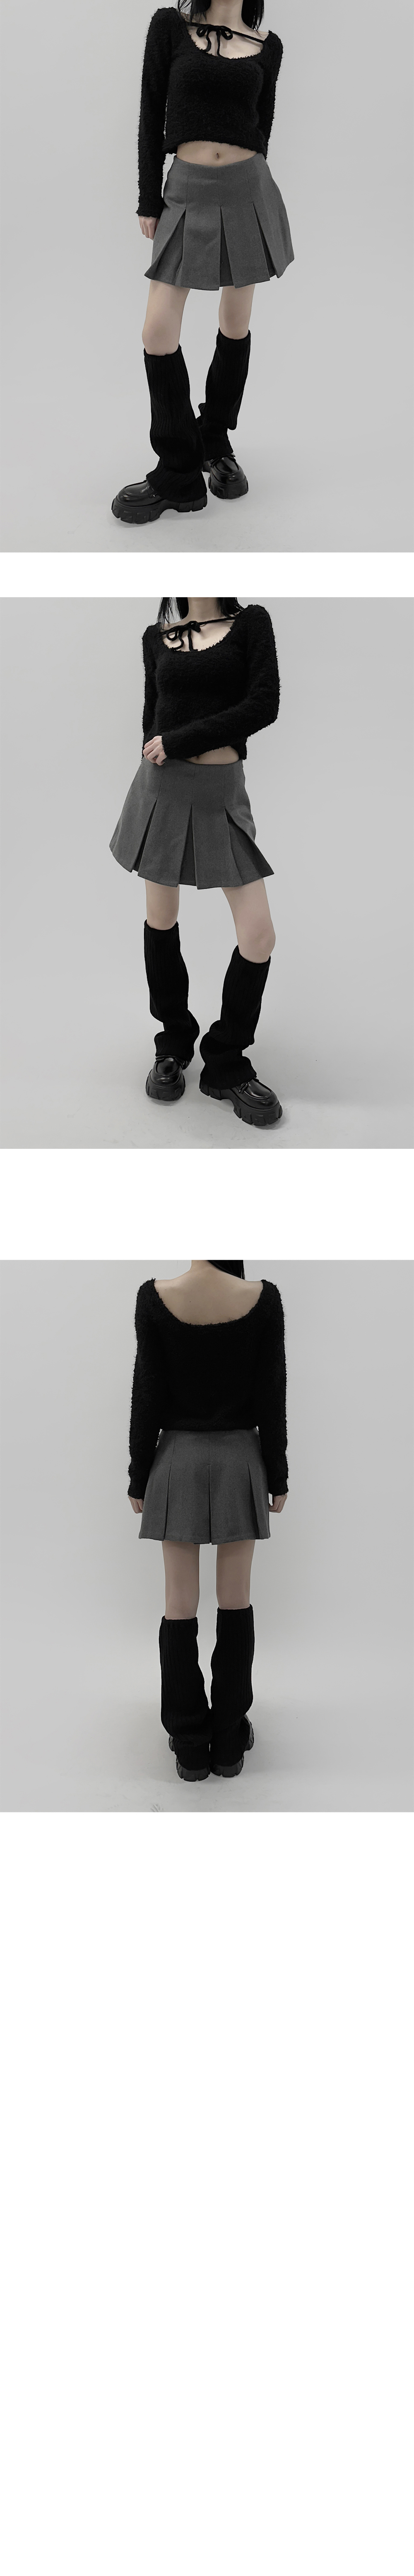 mini skirt charcoal color image-S1L7